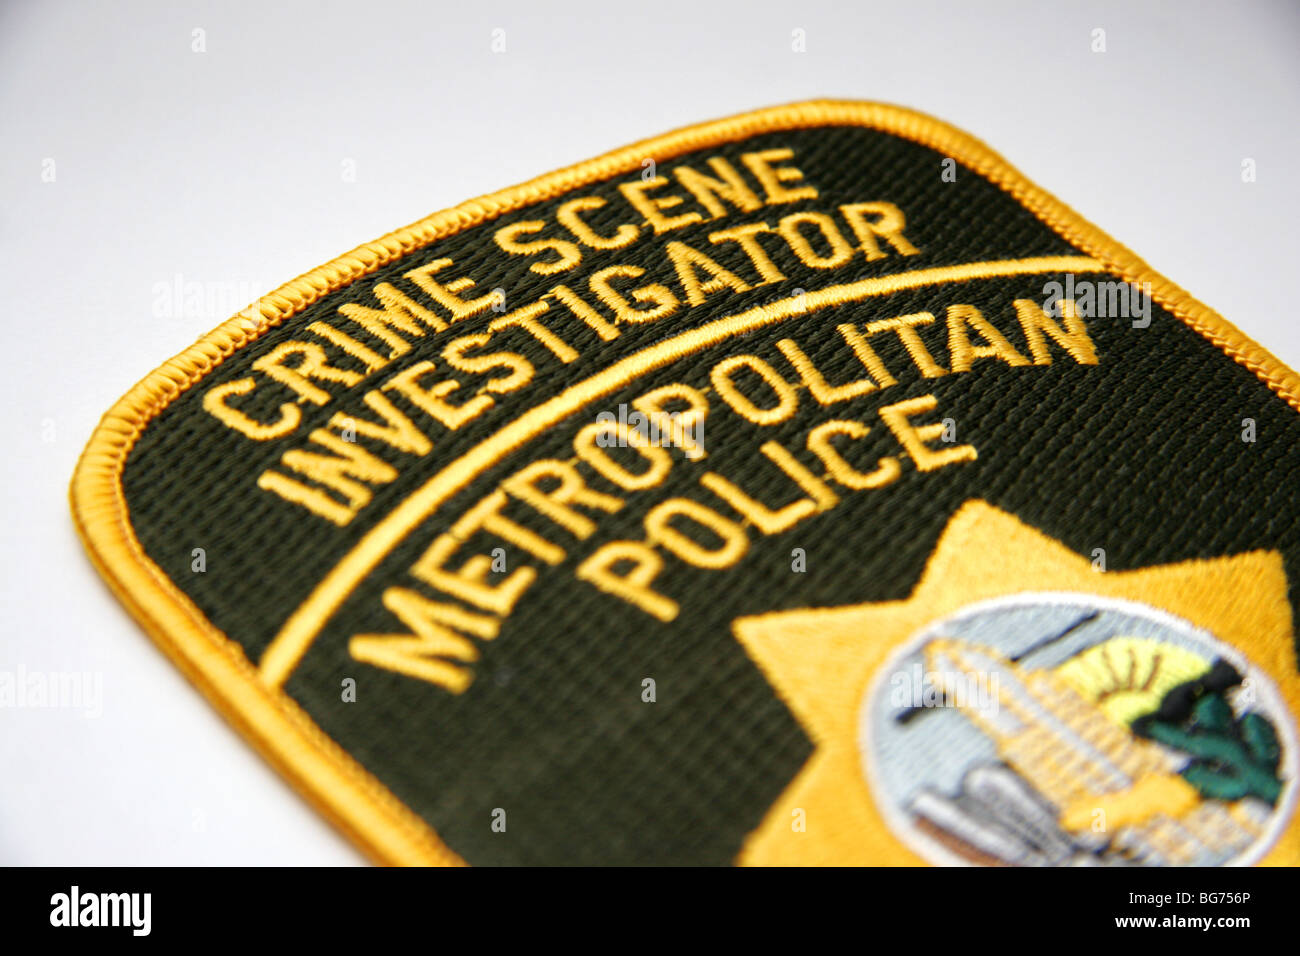 Echten CSI Las Vegas Police patch Stockfoto